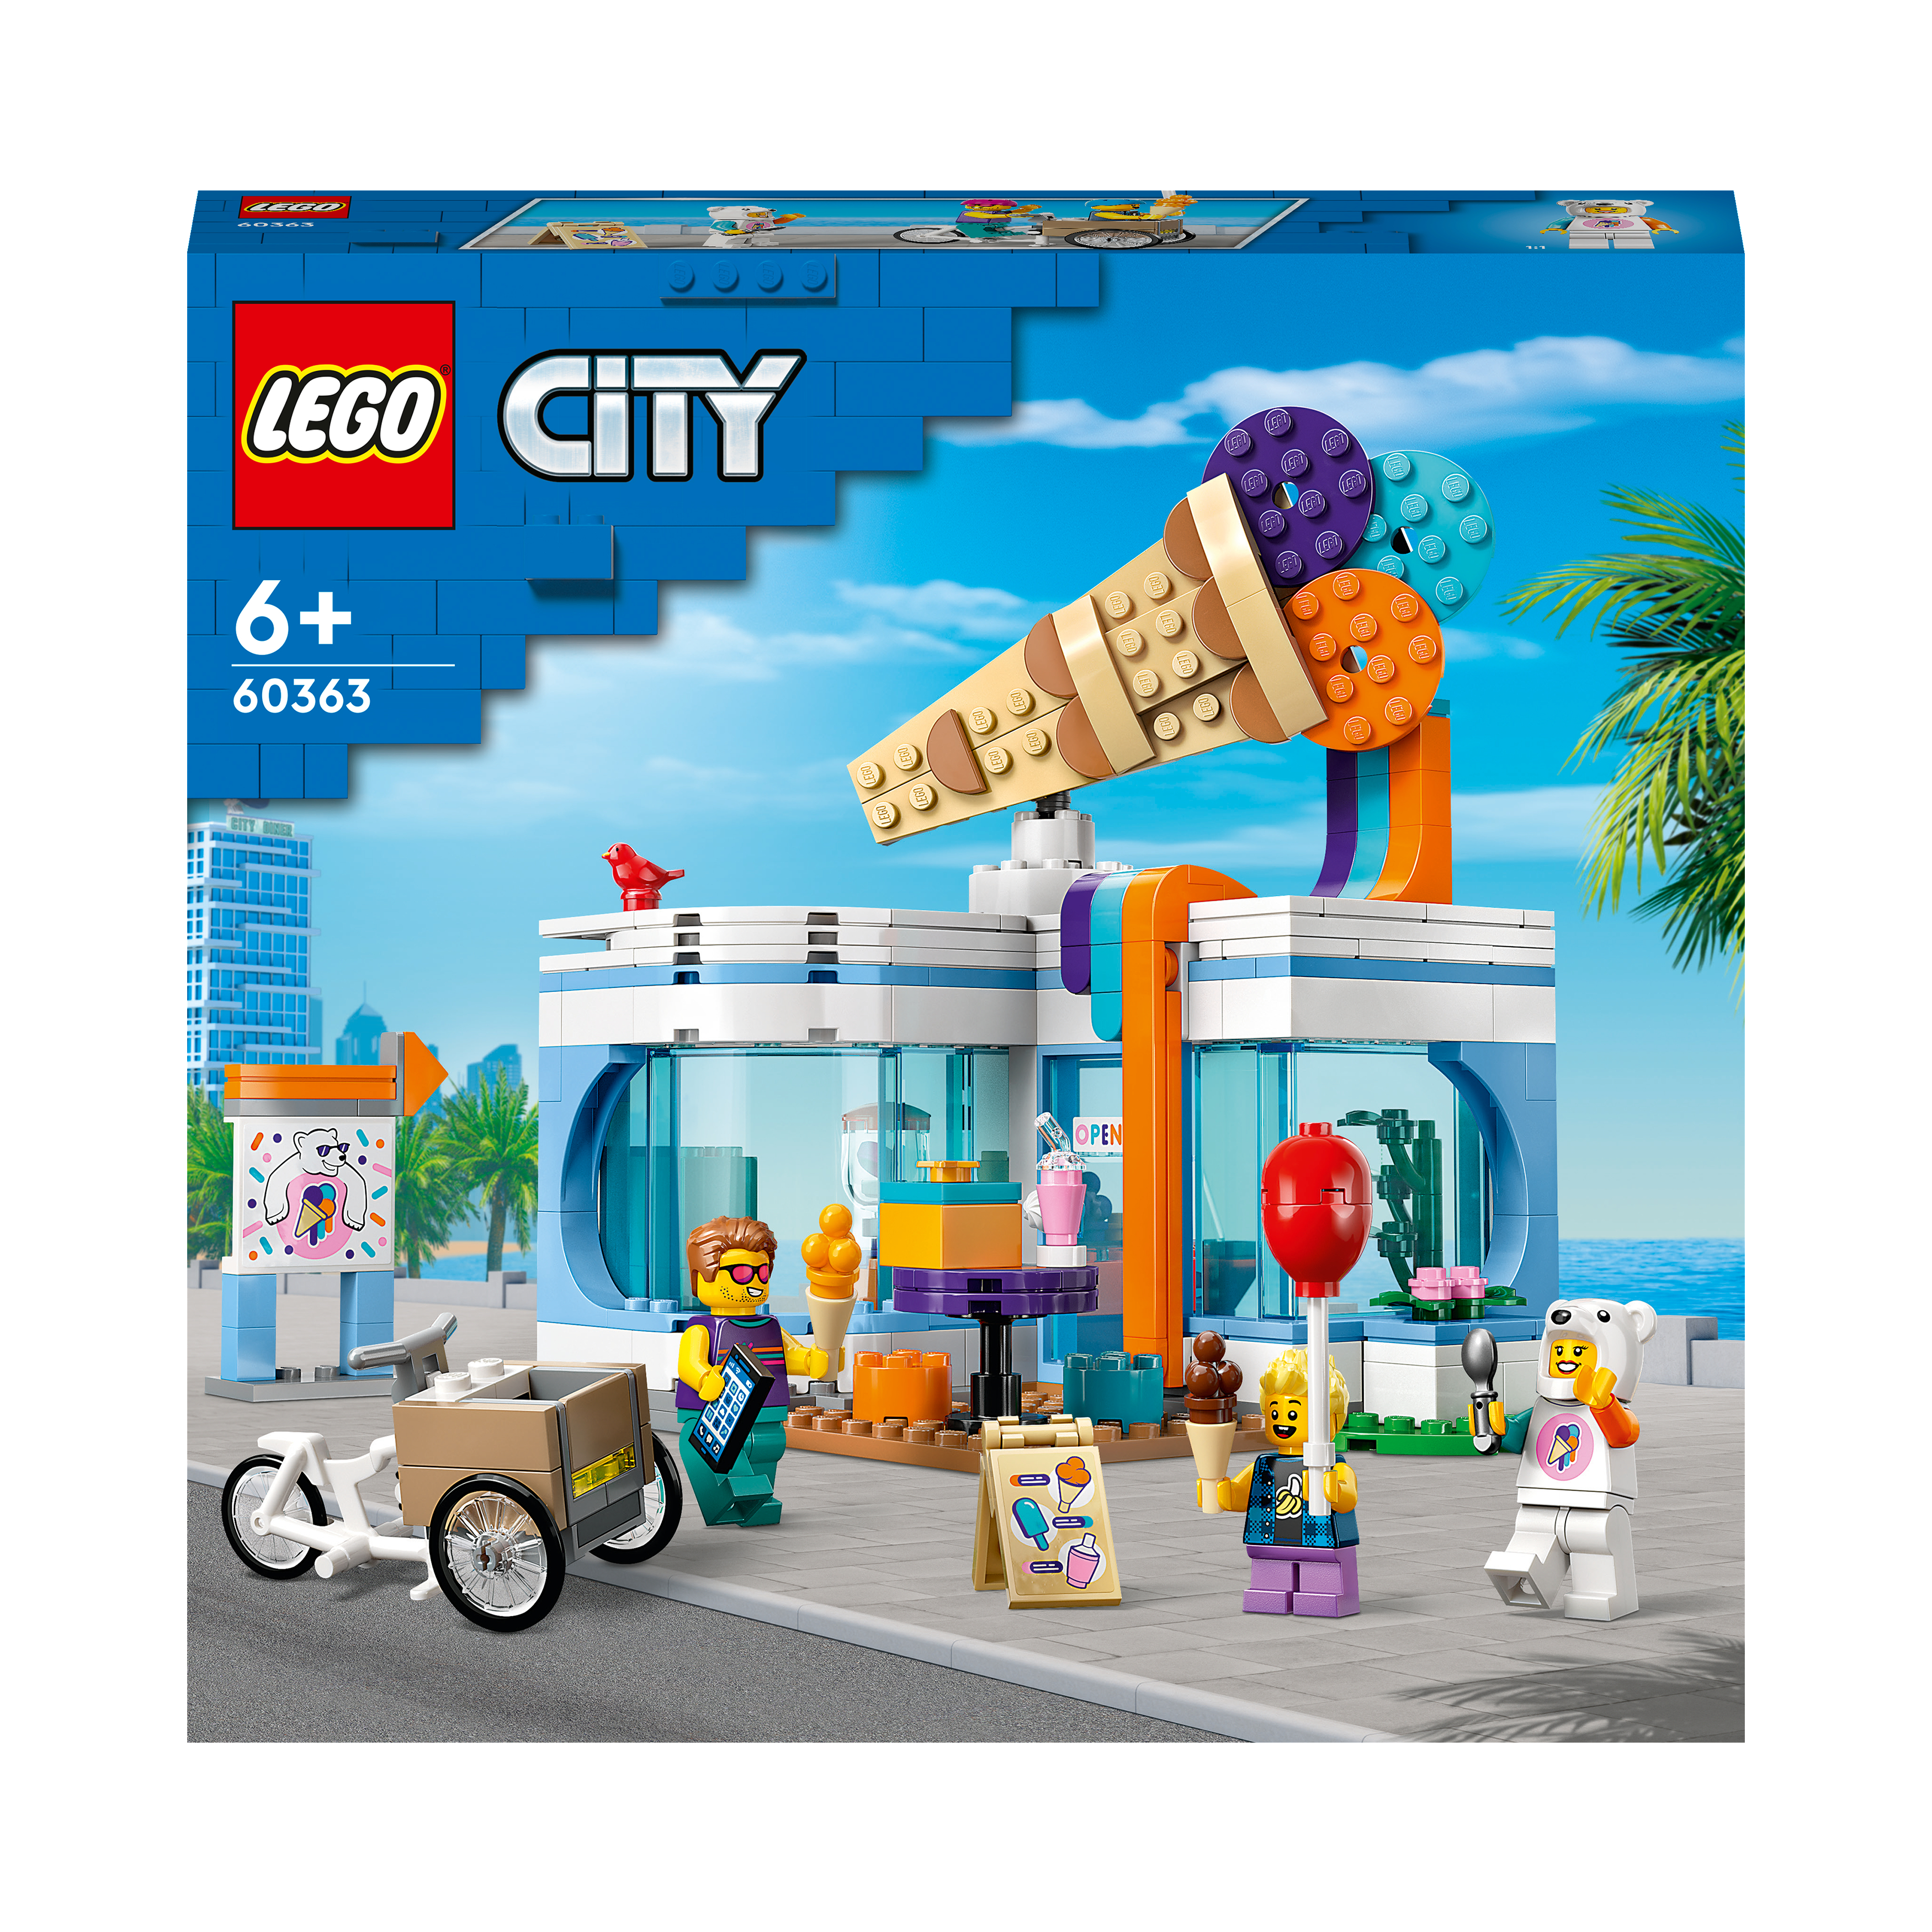 LEGO City 60363 Eisdiele Mehrfarbig Bausatz